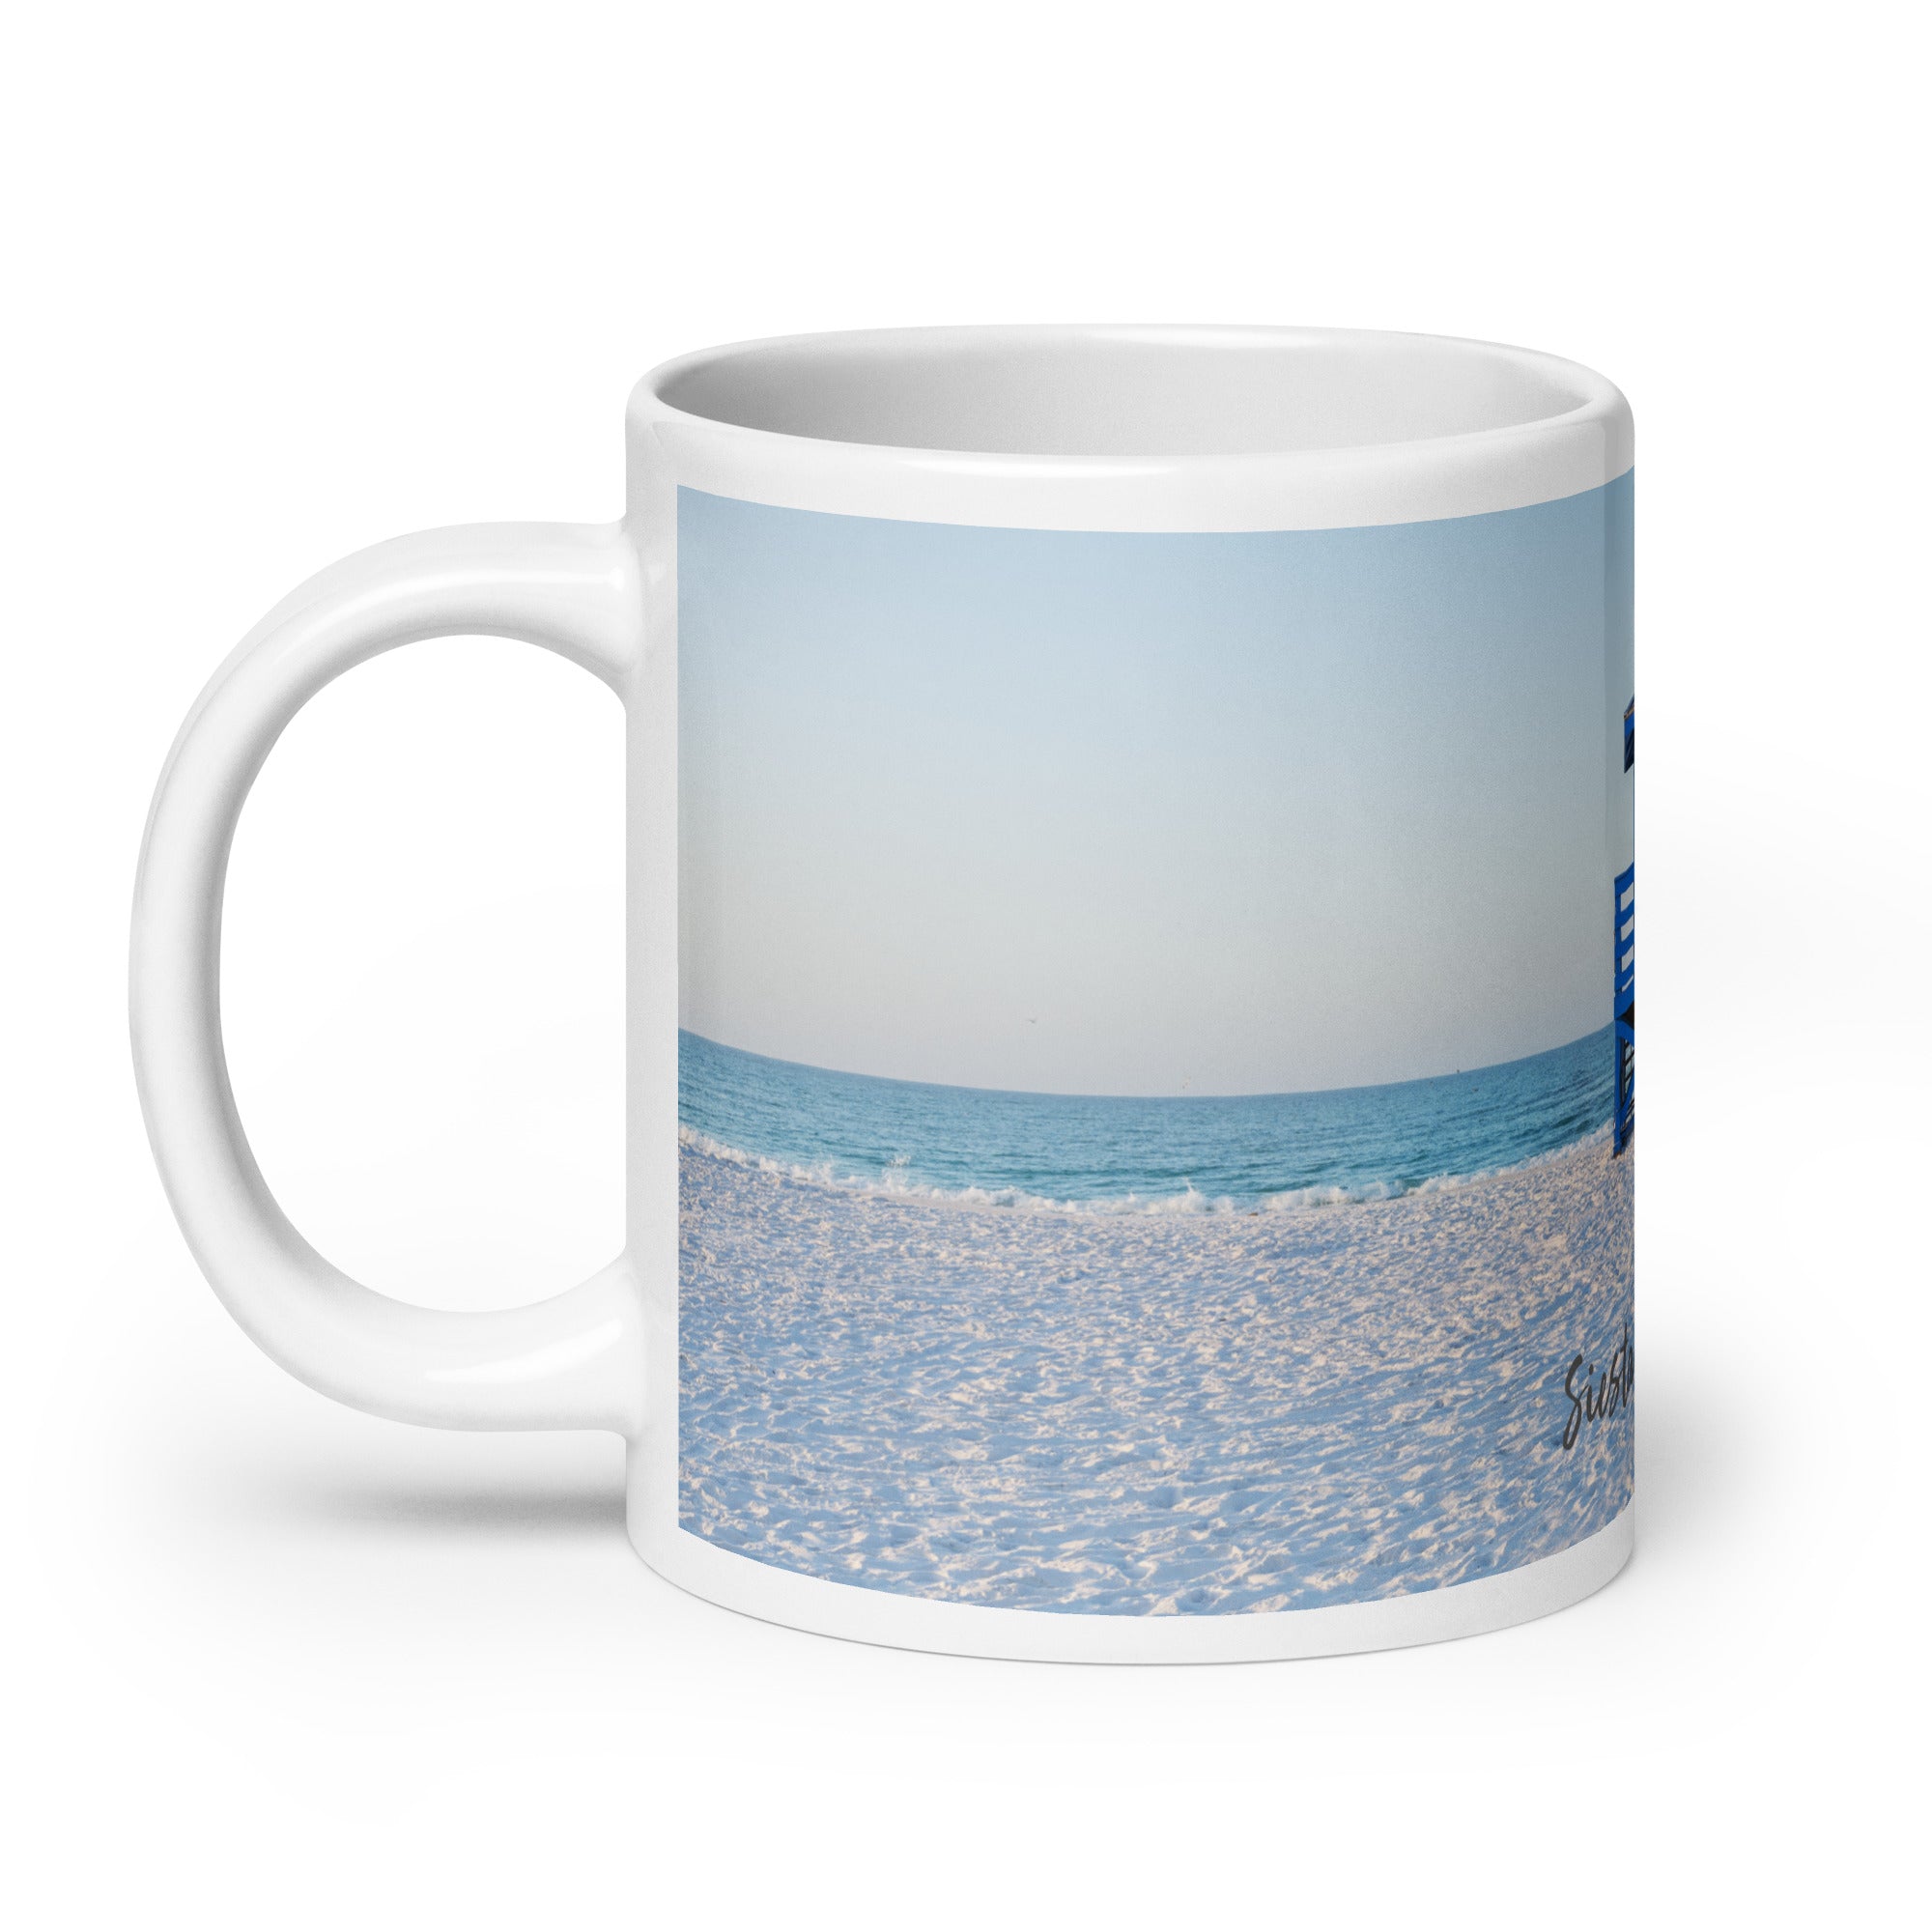 Blue Lifeguard Stand Coffee Mug - Siesta Key Beach